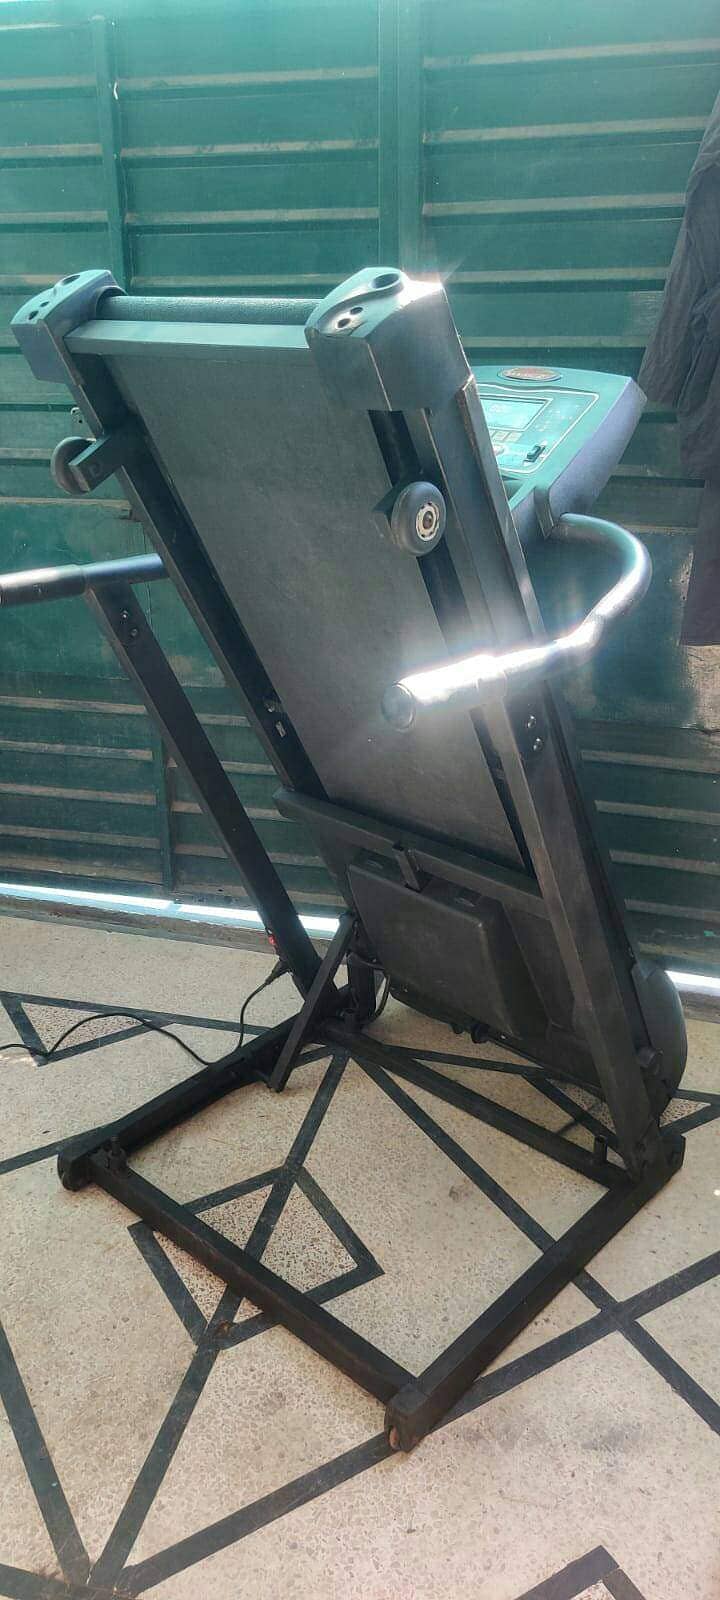 Green master treadmill for sale 0316/1736/128 whatsapp 5